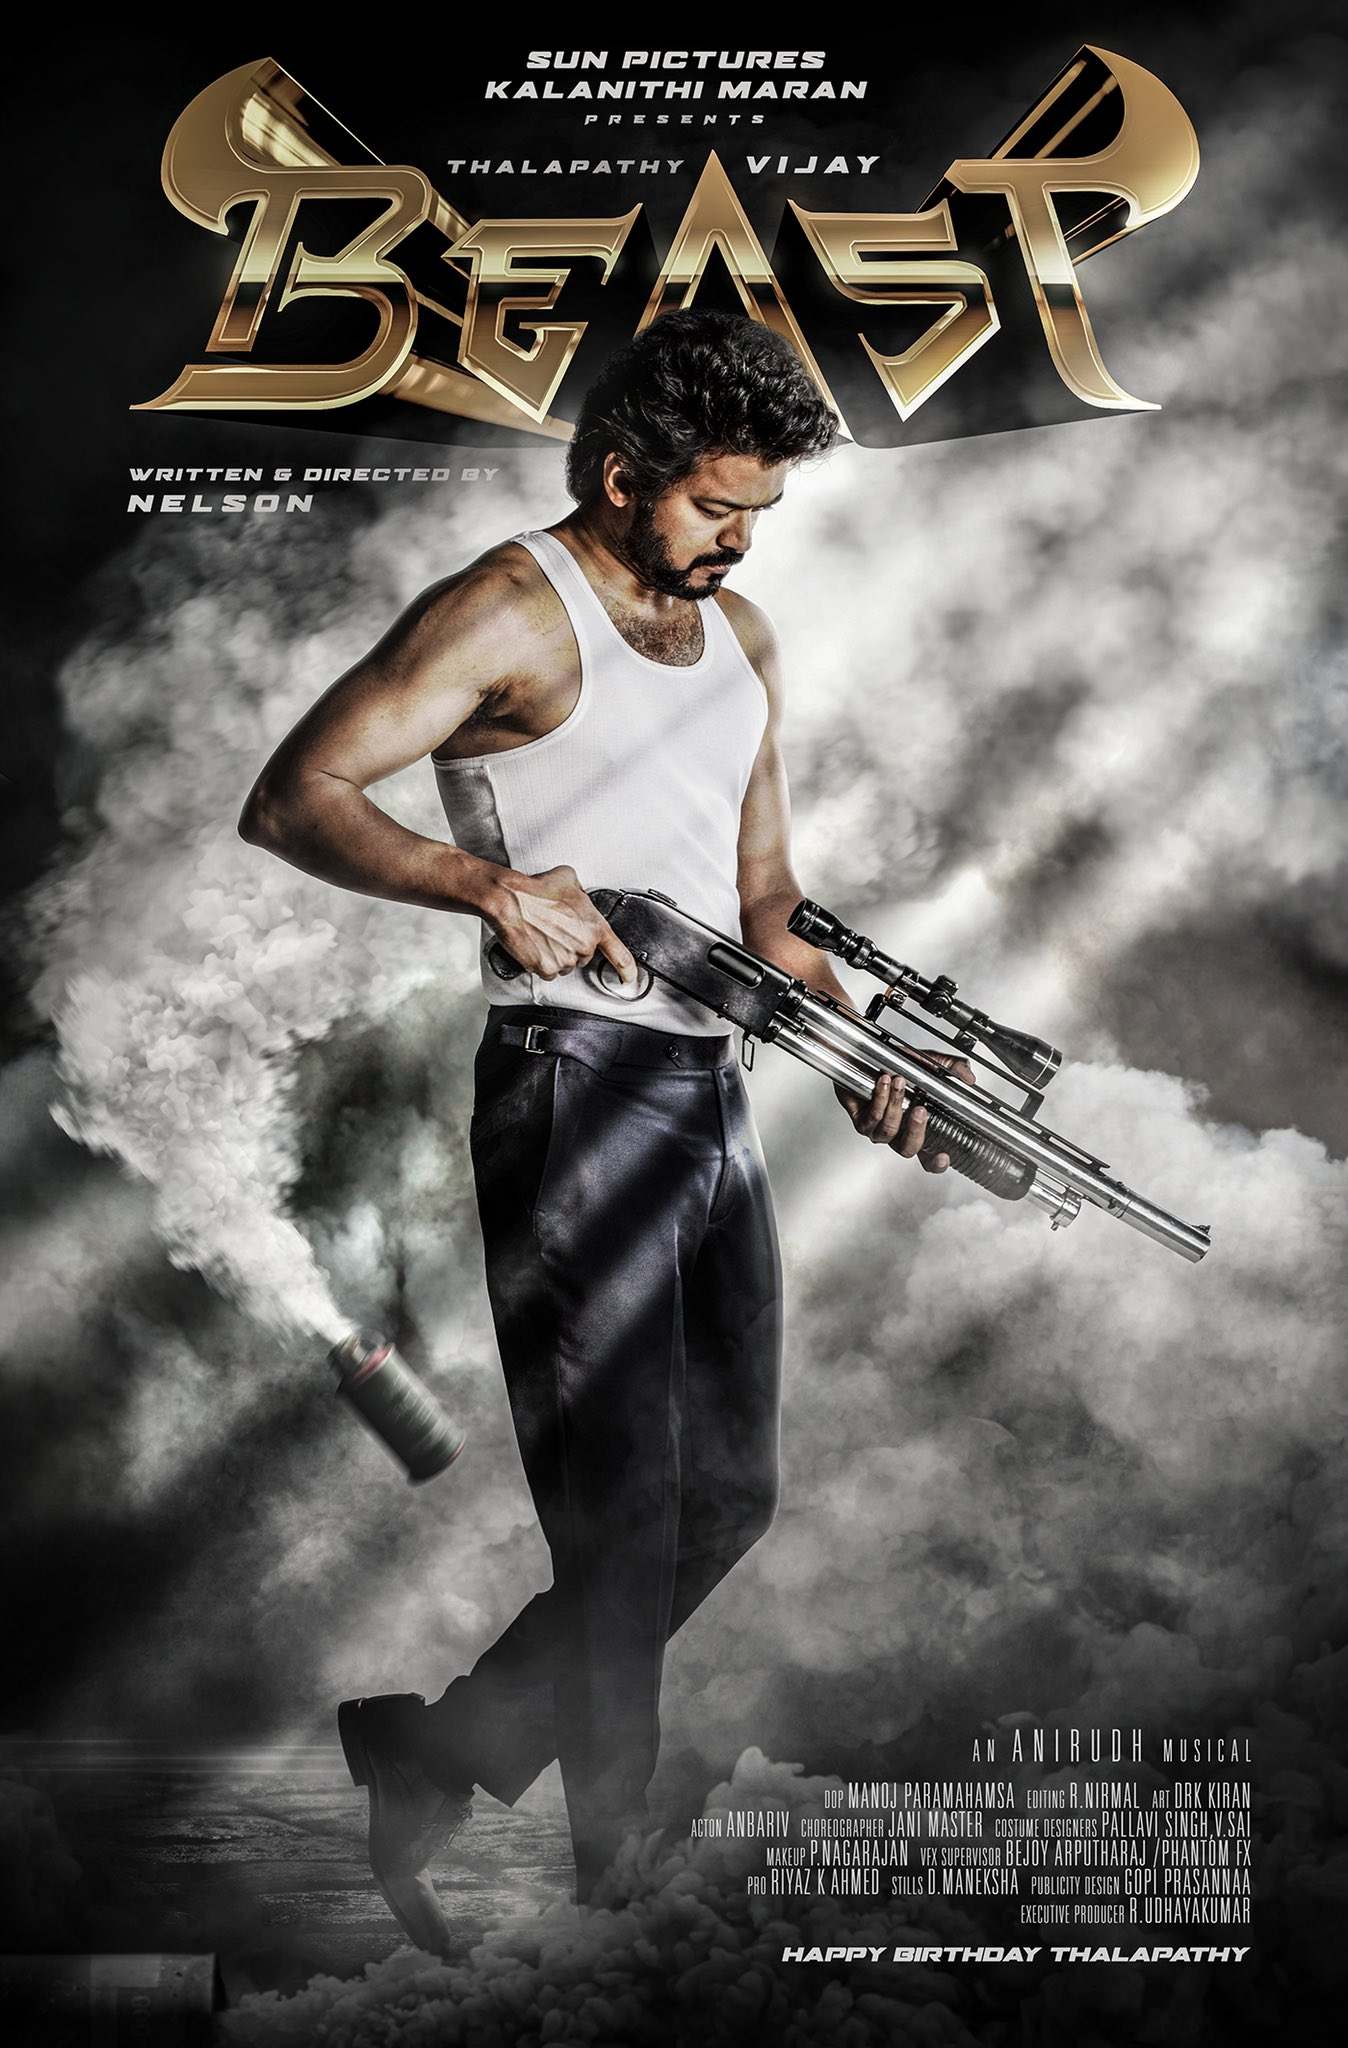 actor vijay beast movie update with massive image